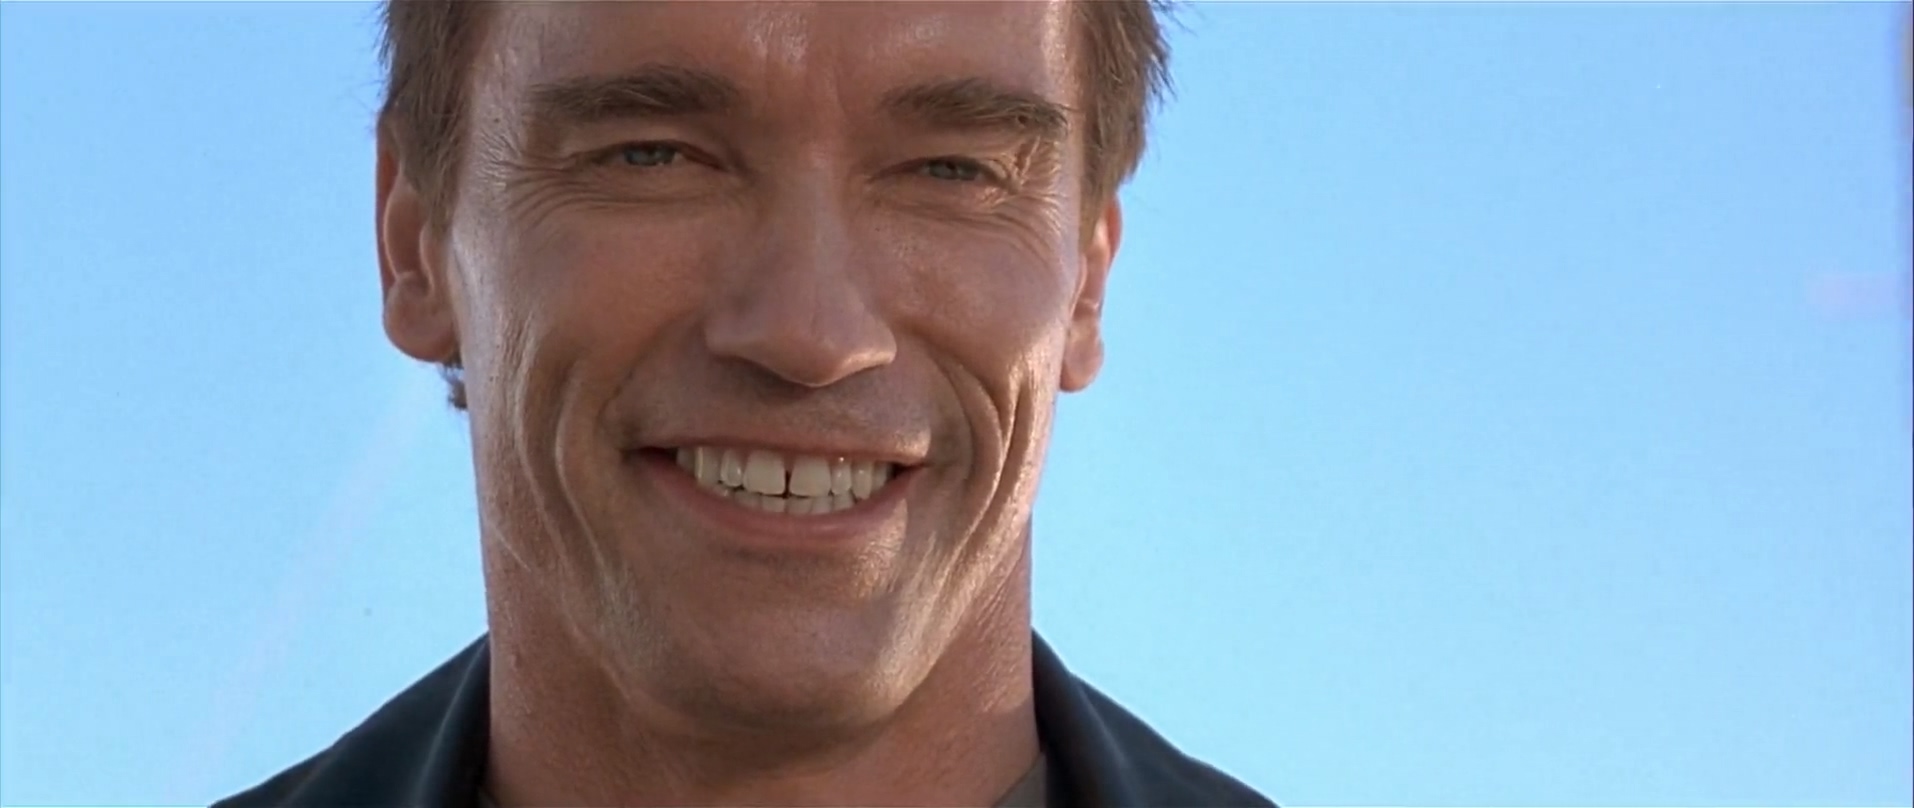 Where Was Terminator 2: Judgement Day Filmed?